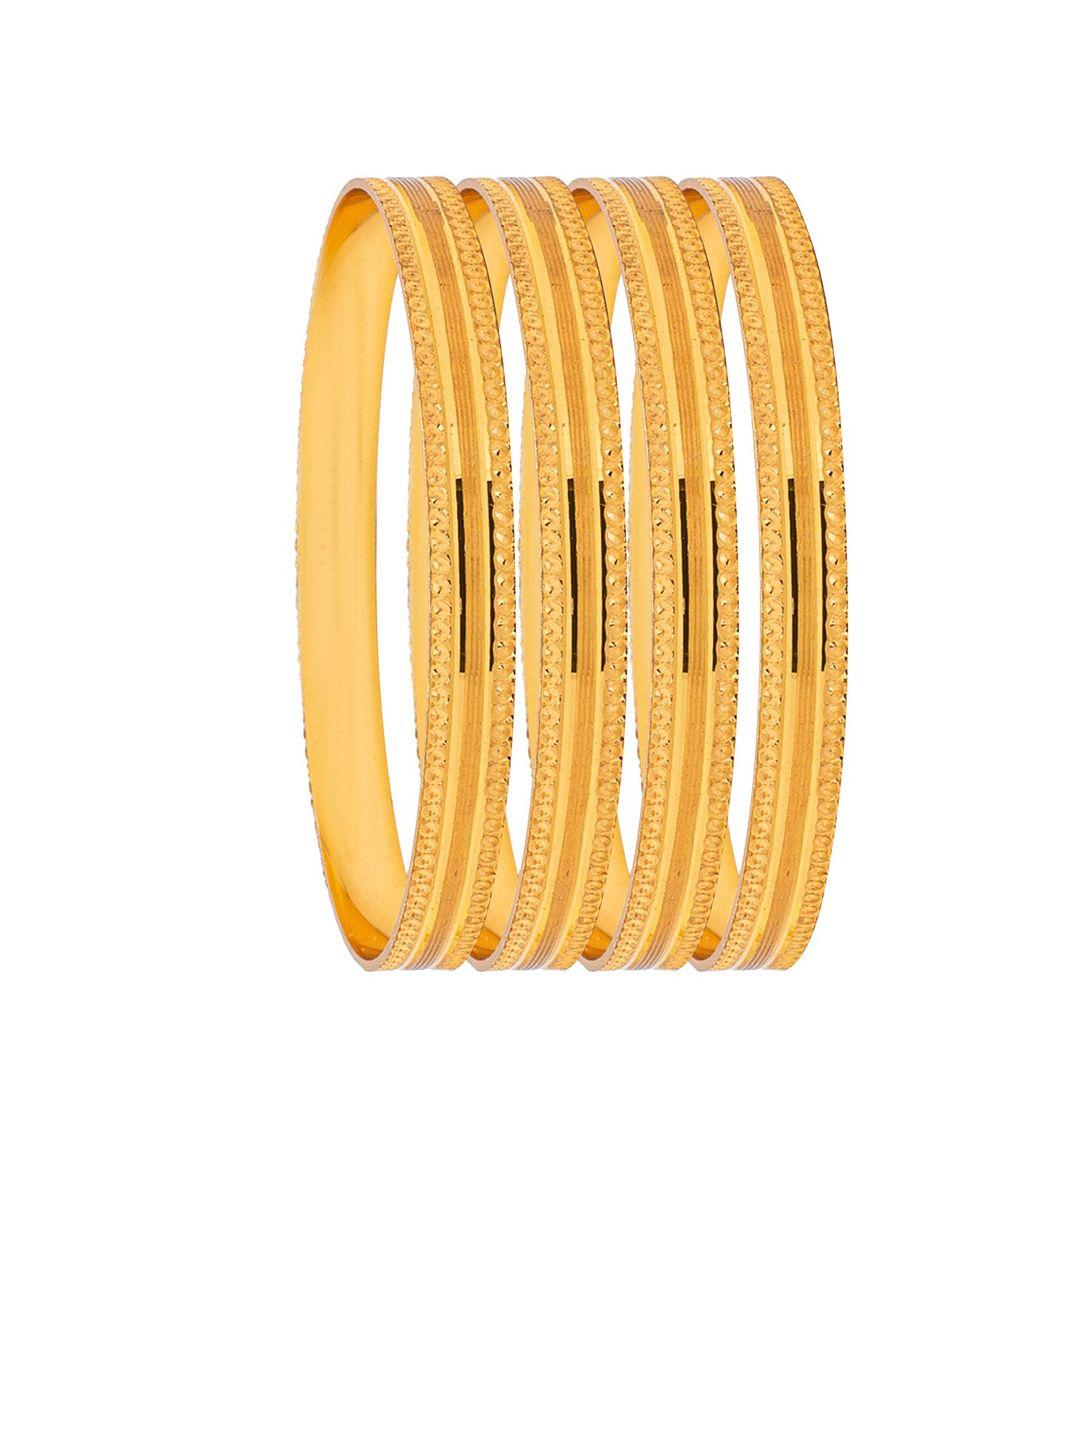 shining-jewel---by-shivansh-set-of-4-gold-plated-bangles